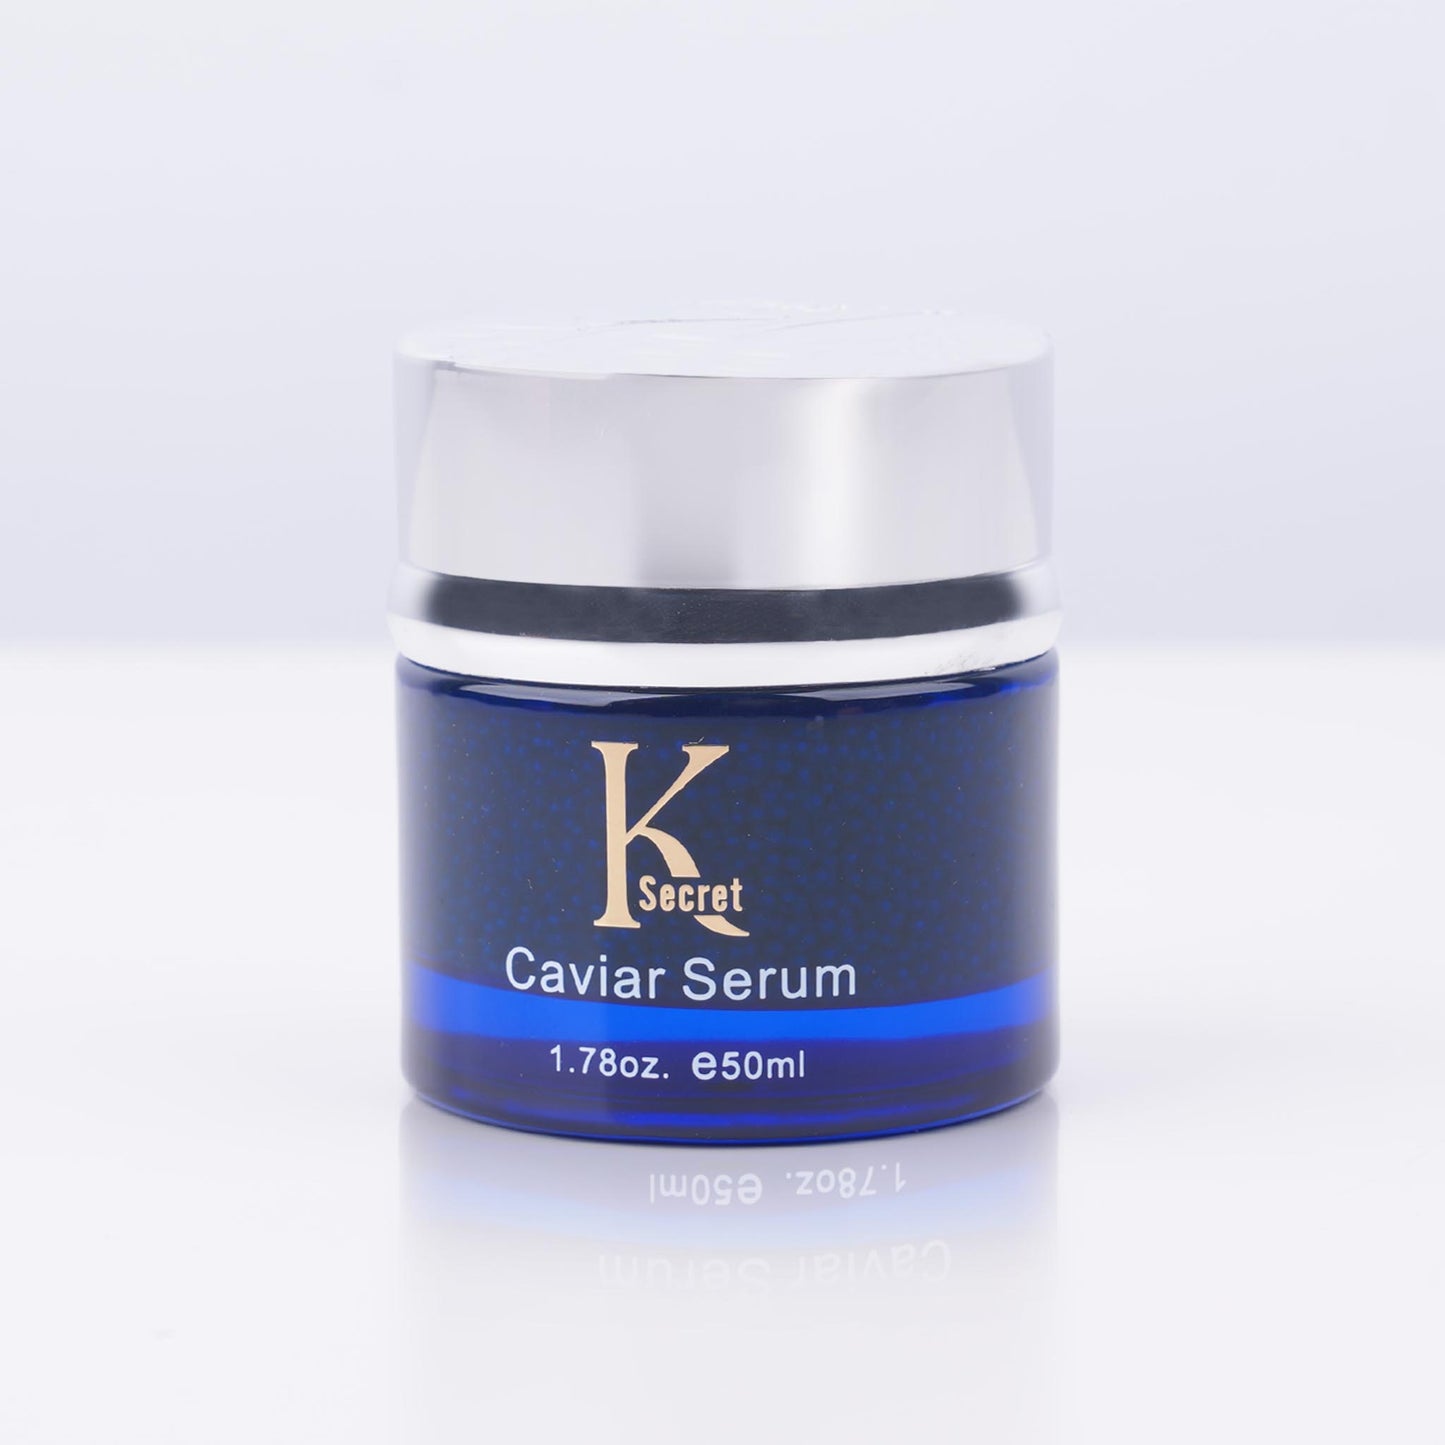 Caviar Serum